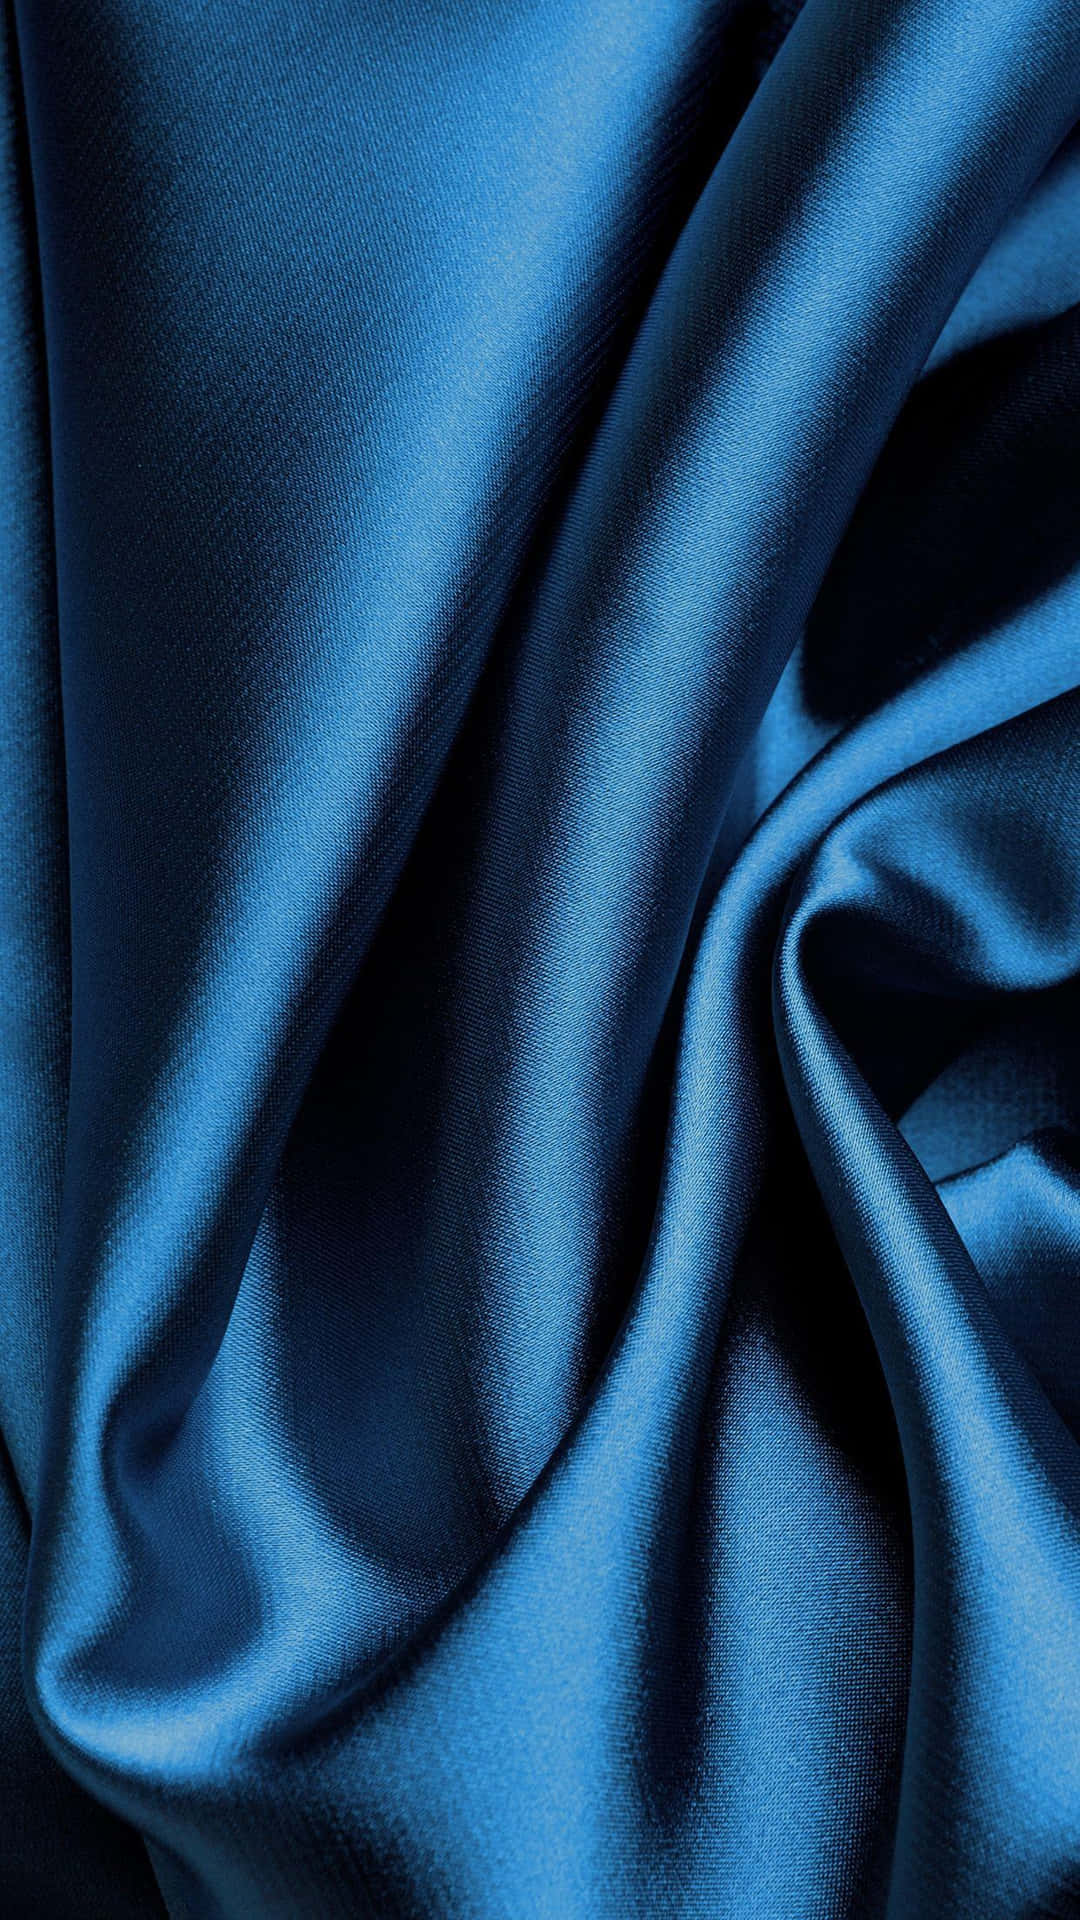 Luxurious silk fabric